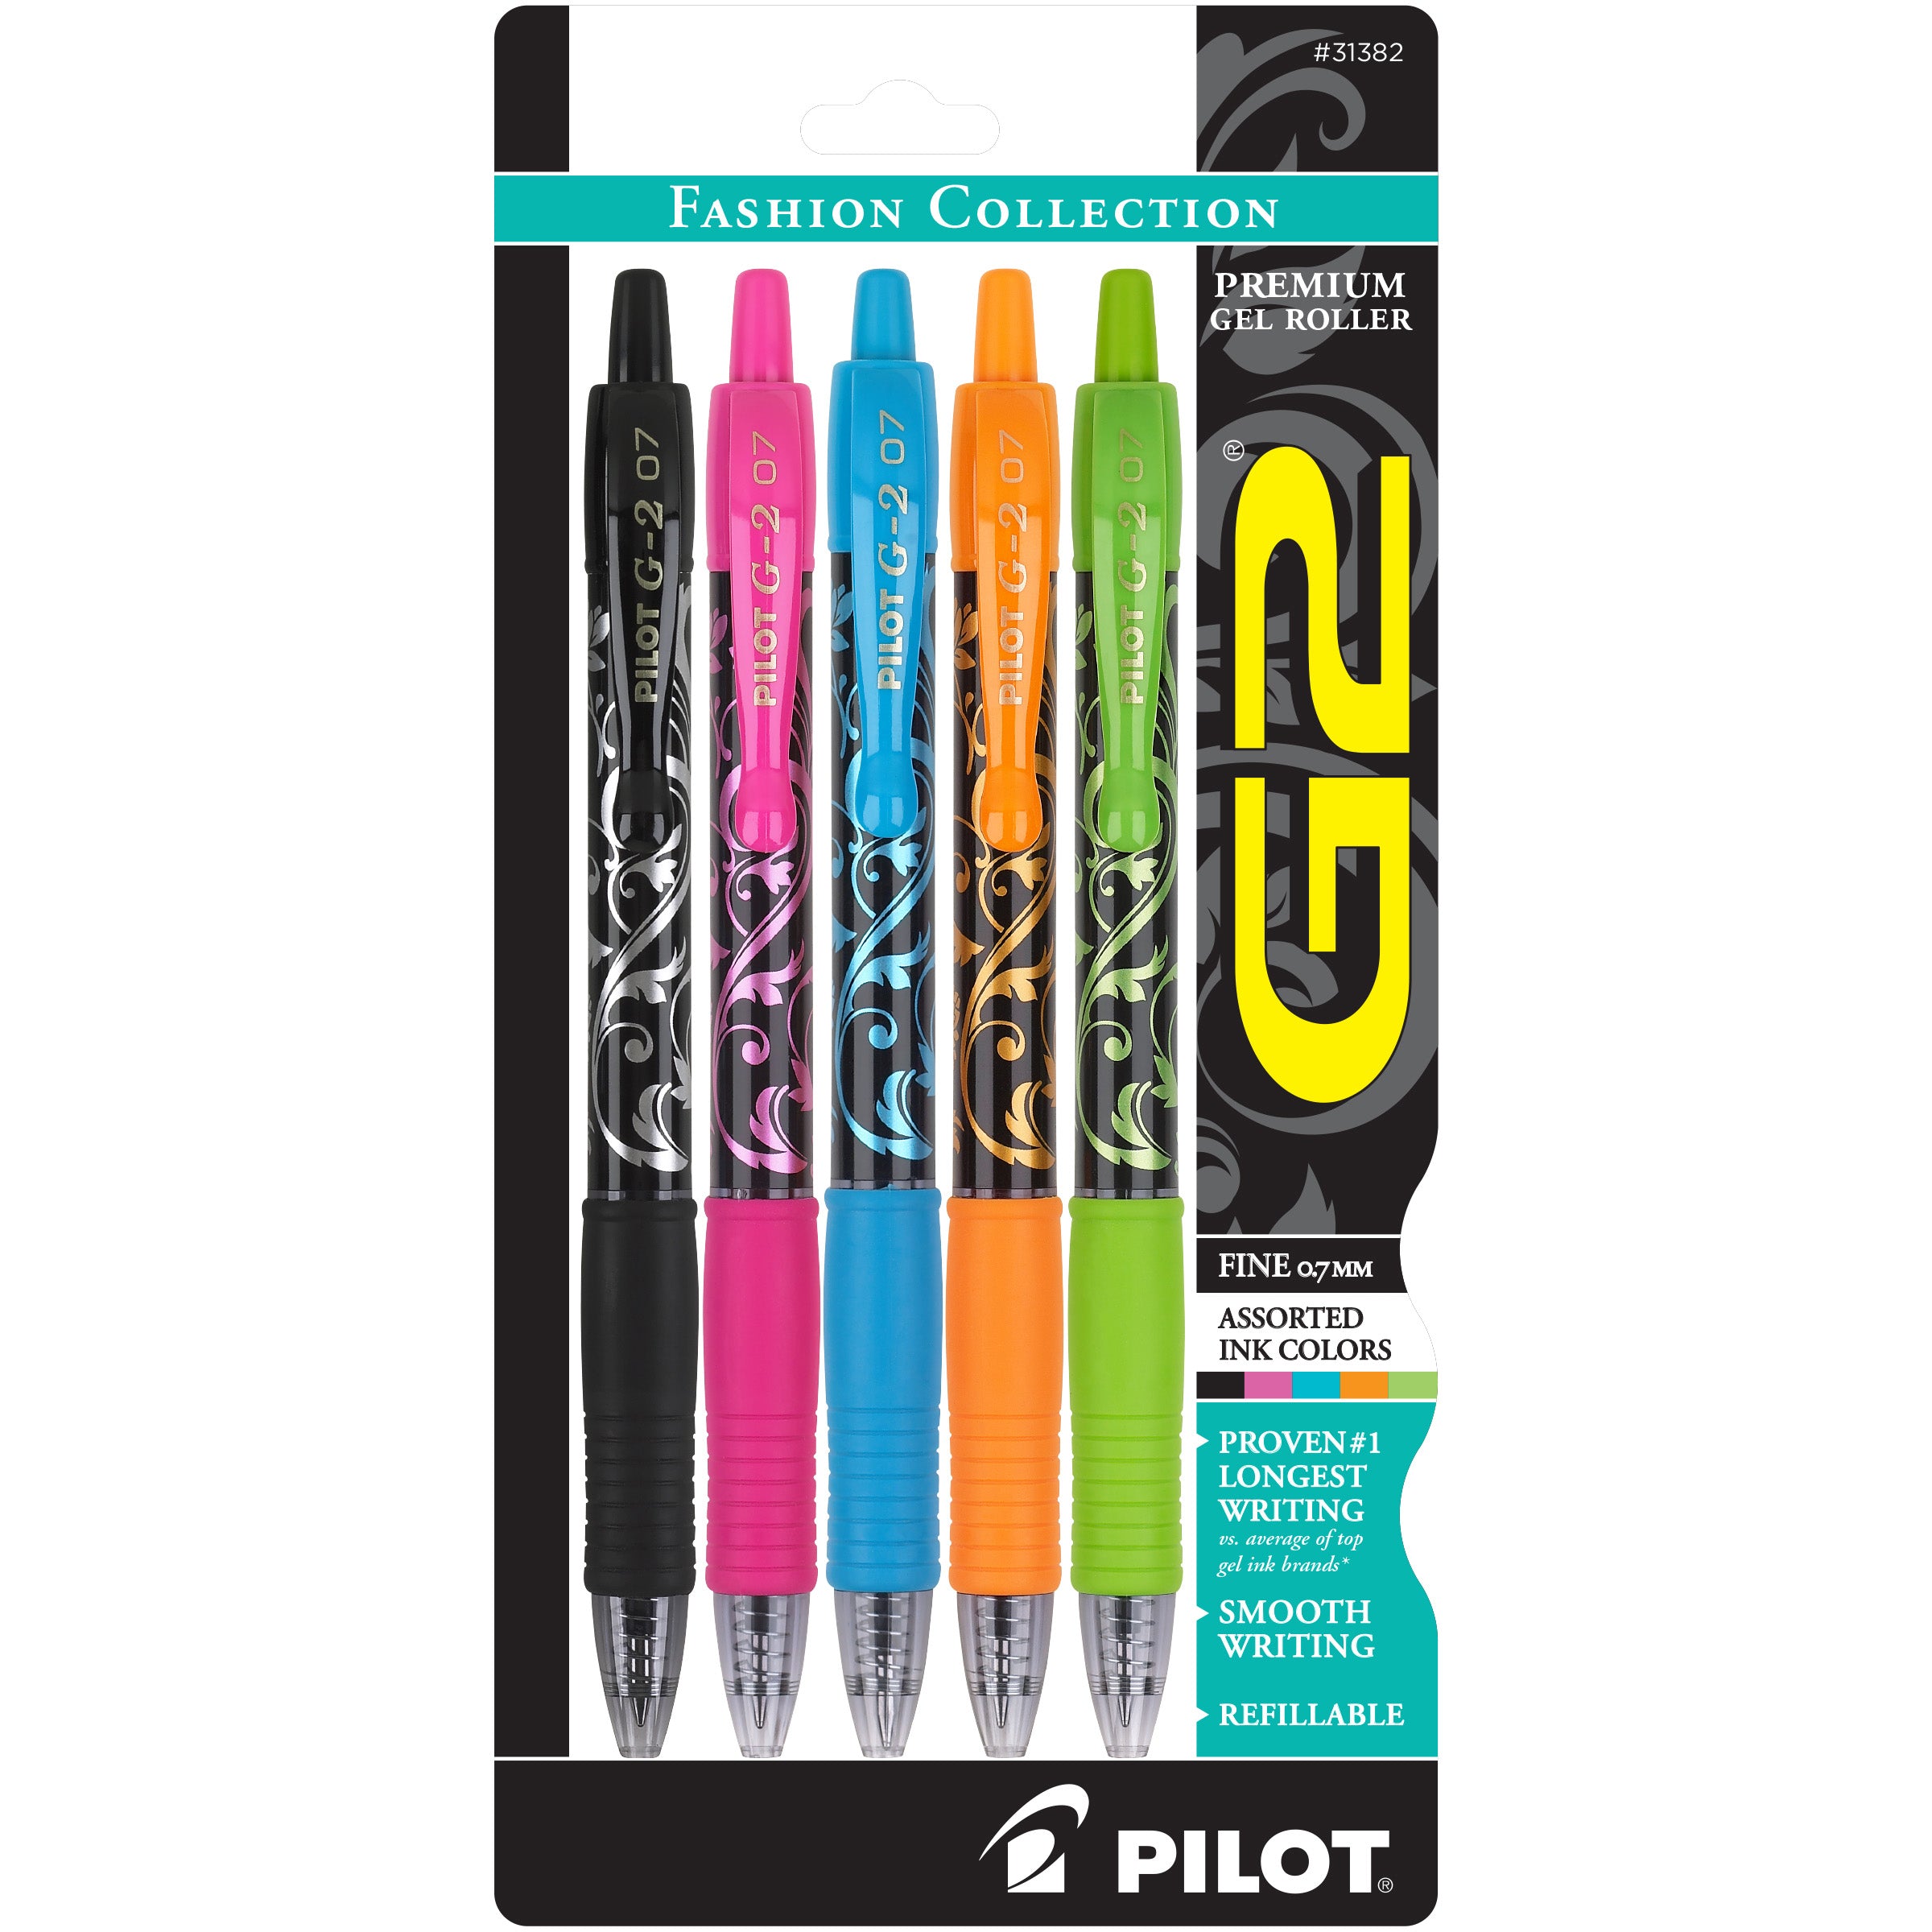 Pilot Frixion Erasable Pens - 5 pack – Defined Life - Official